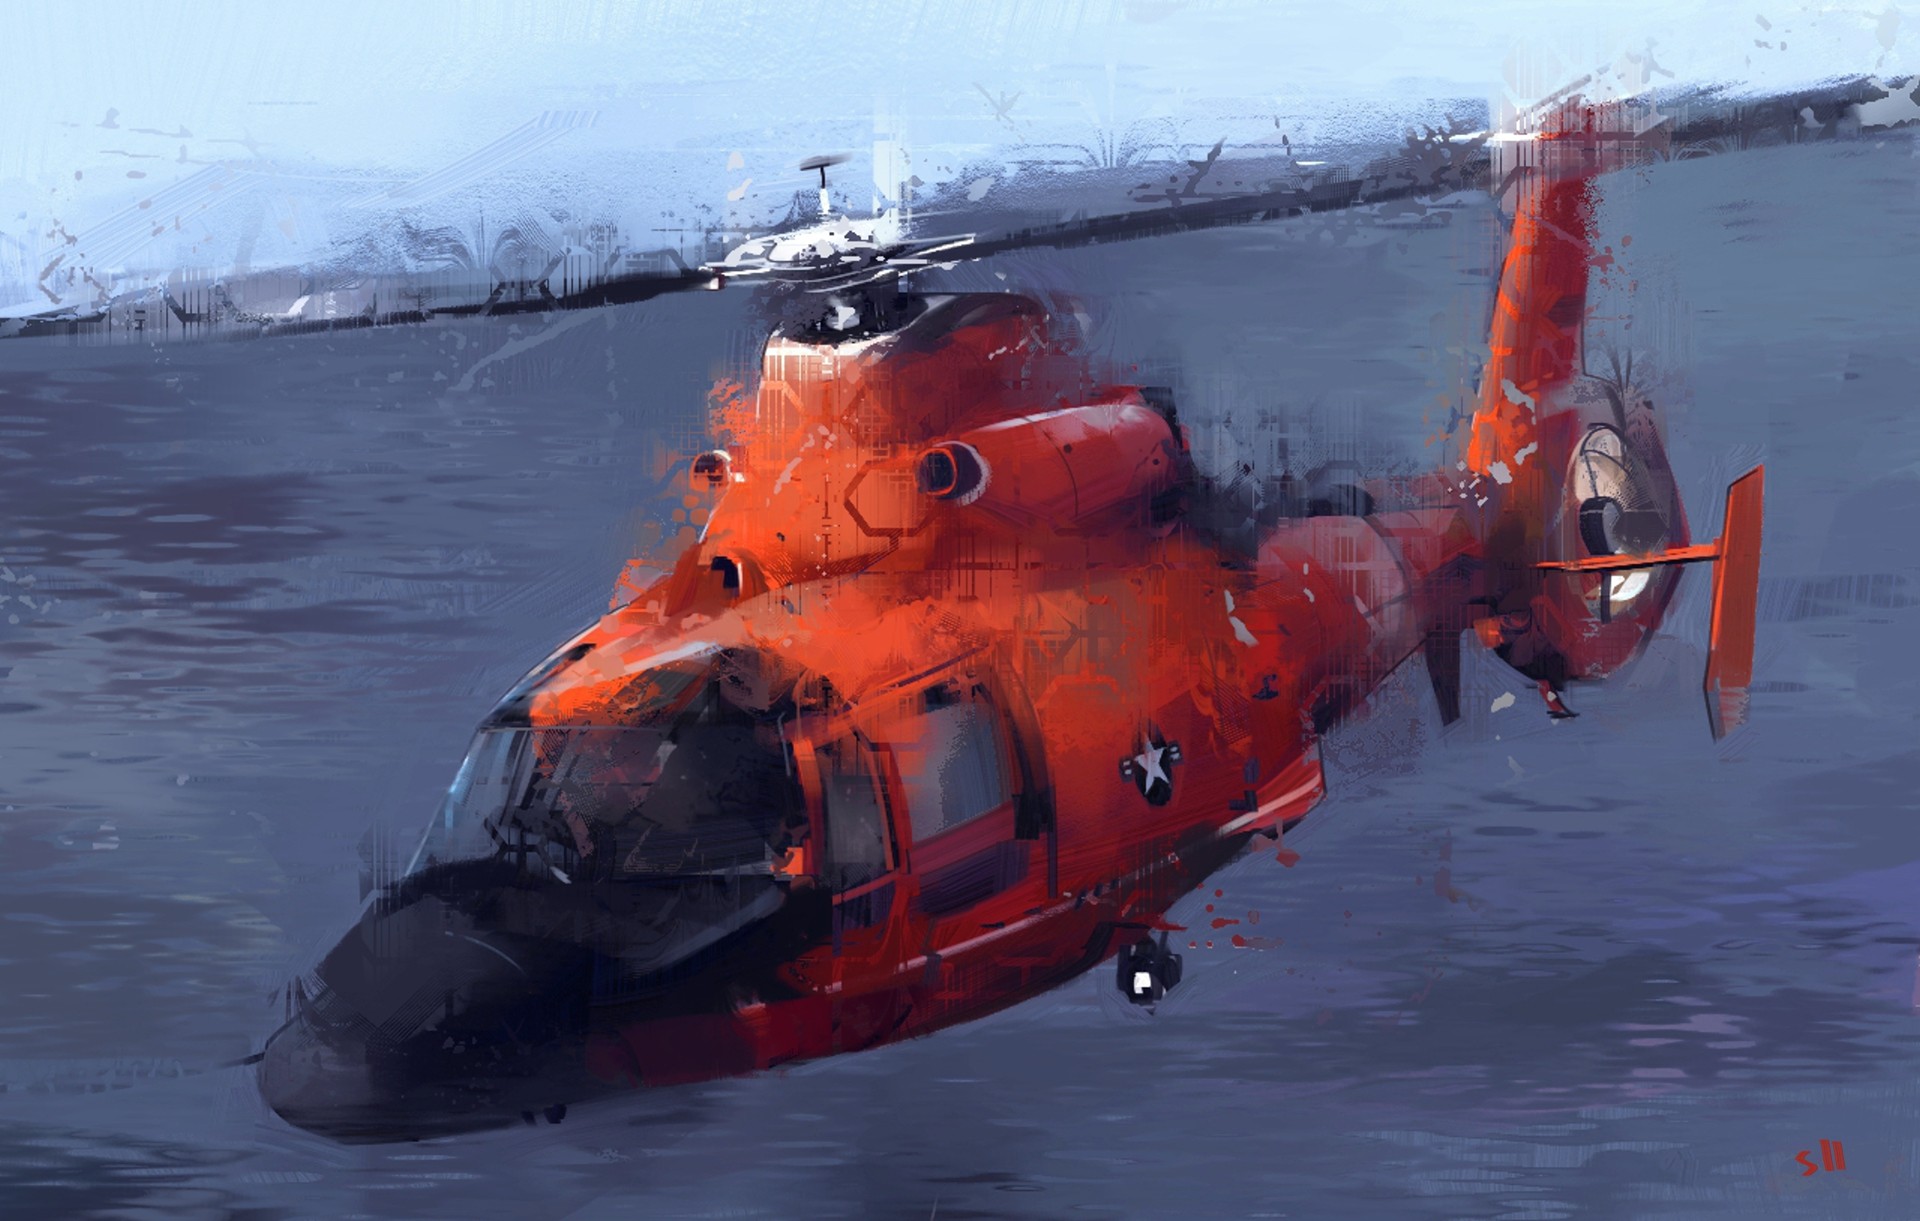 General 1920x1221 helicopters artwork digital art painting 2D ShuoLin Liu illustration vehicle United States Coast Guard